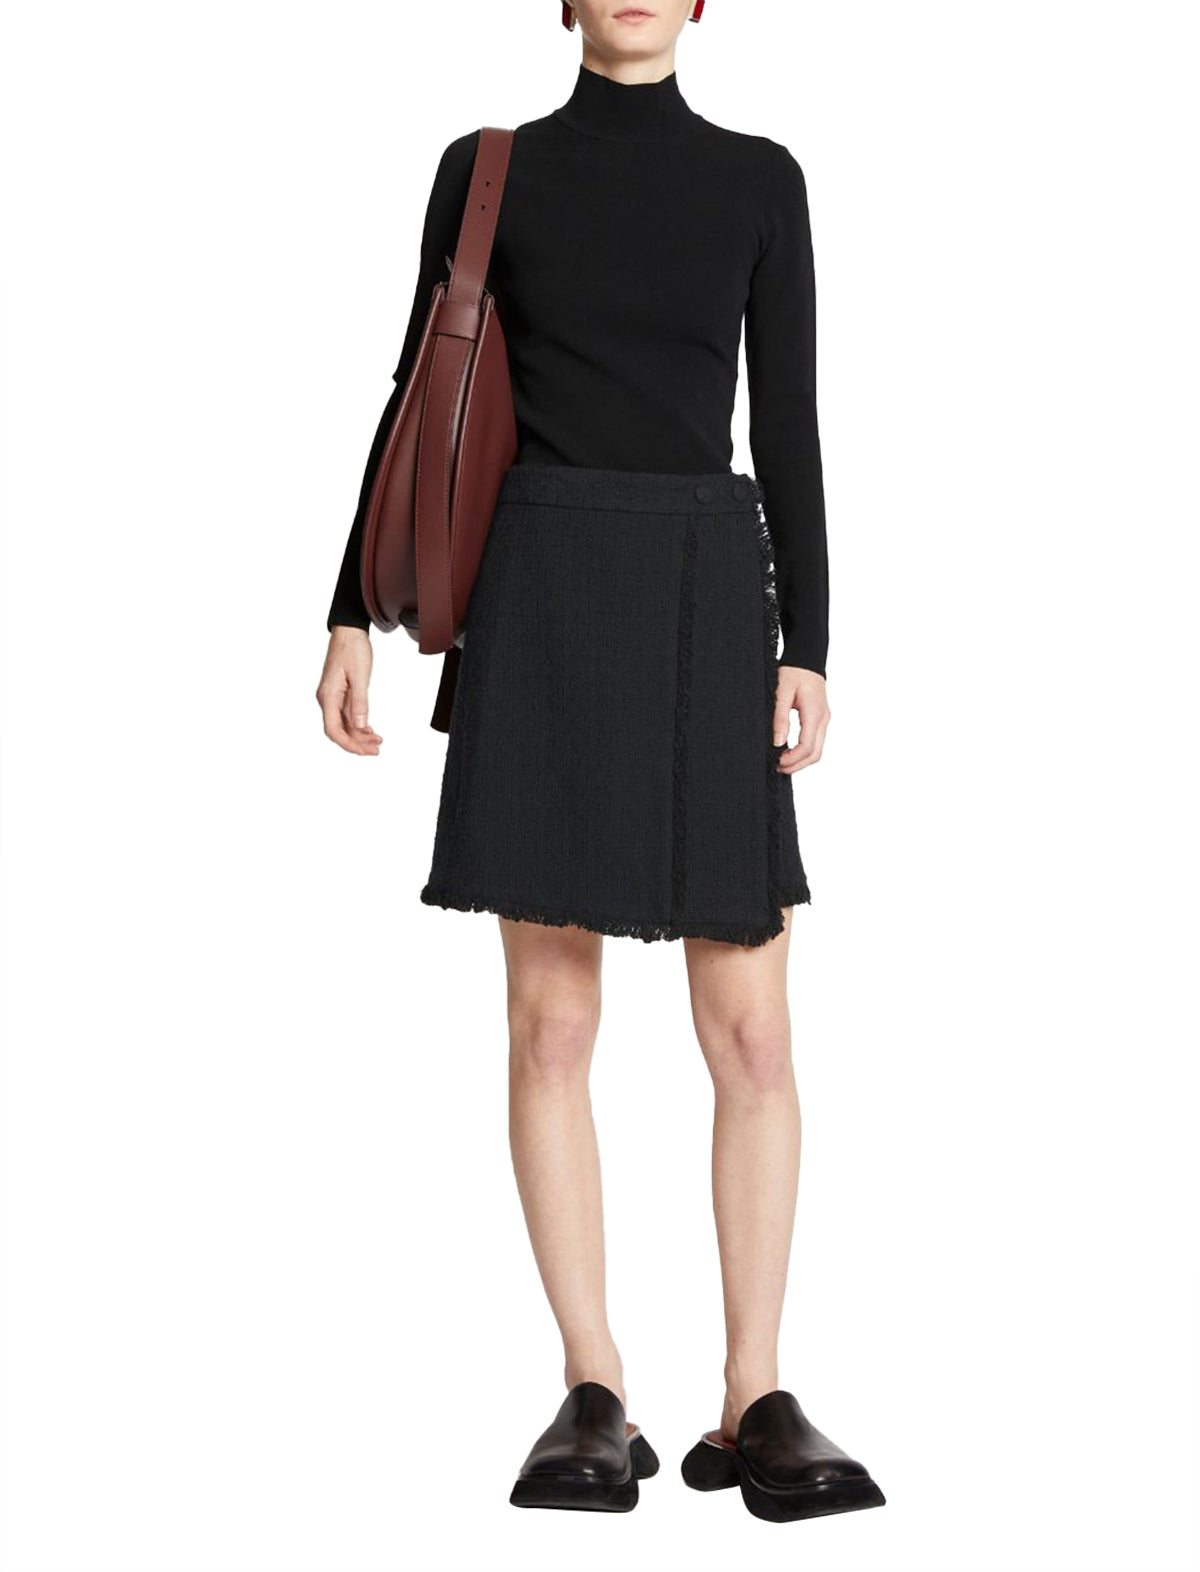 PROENZA SCHOULER WHITE LABEL Tweed Mini Skirt in Black